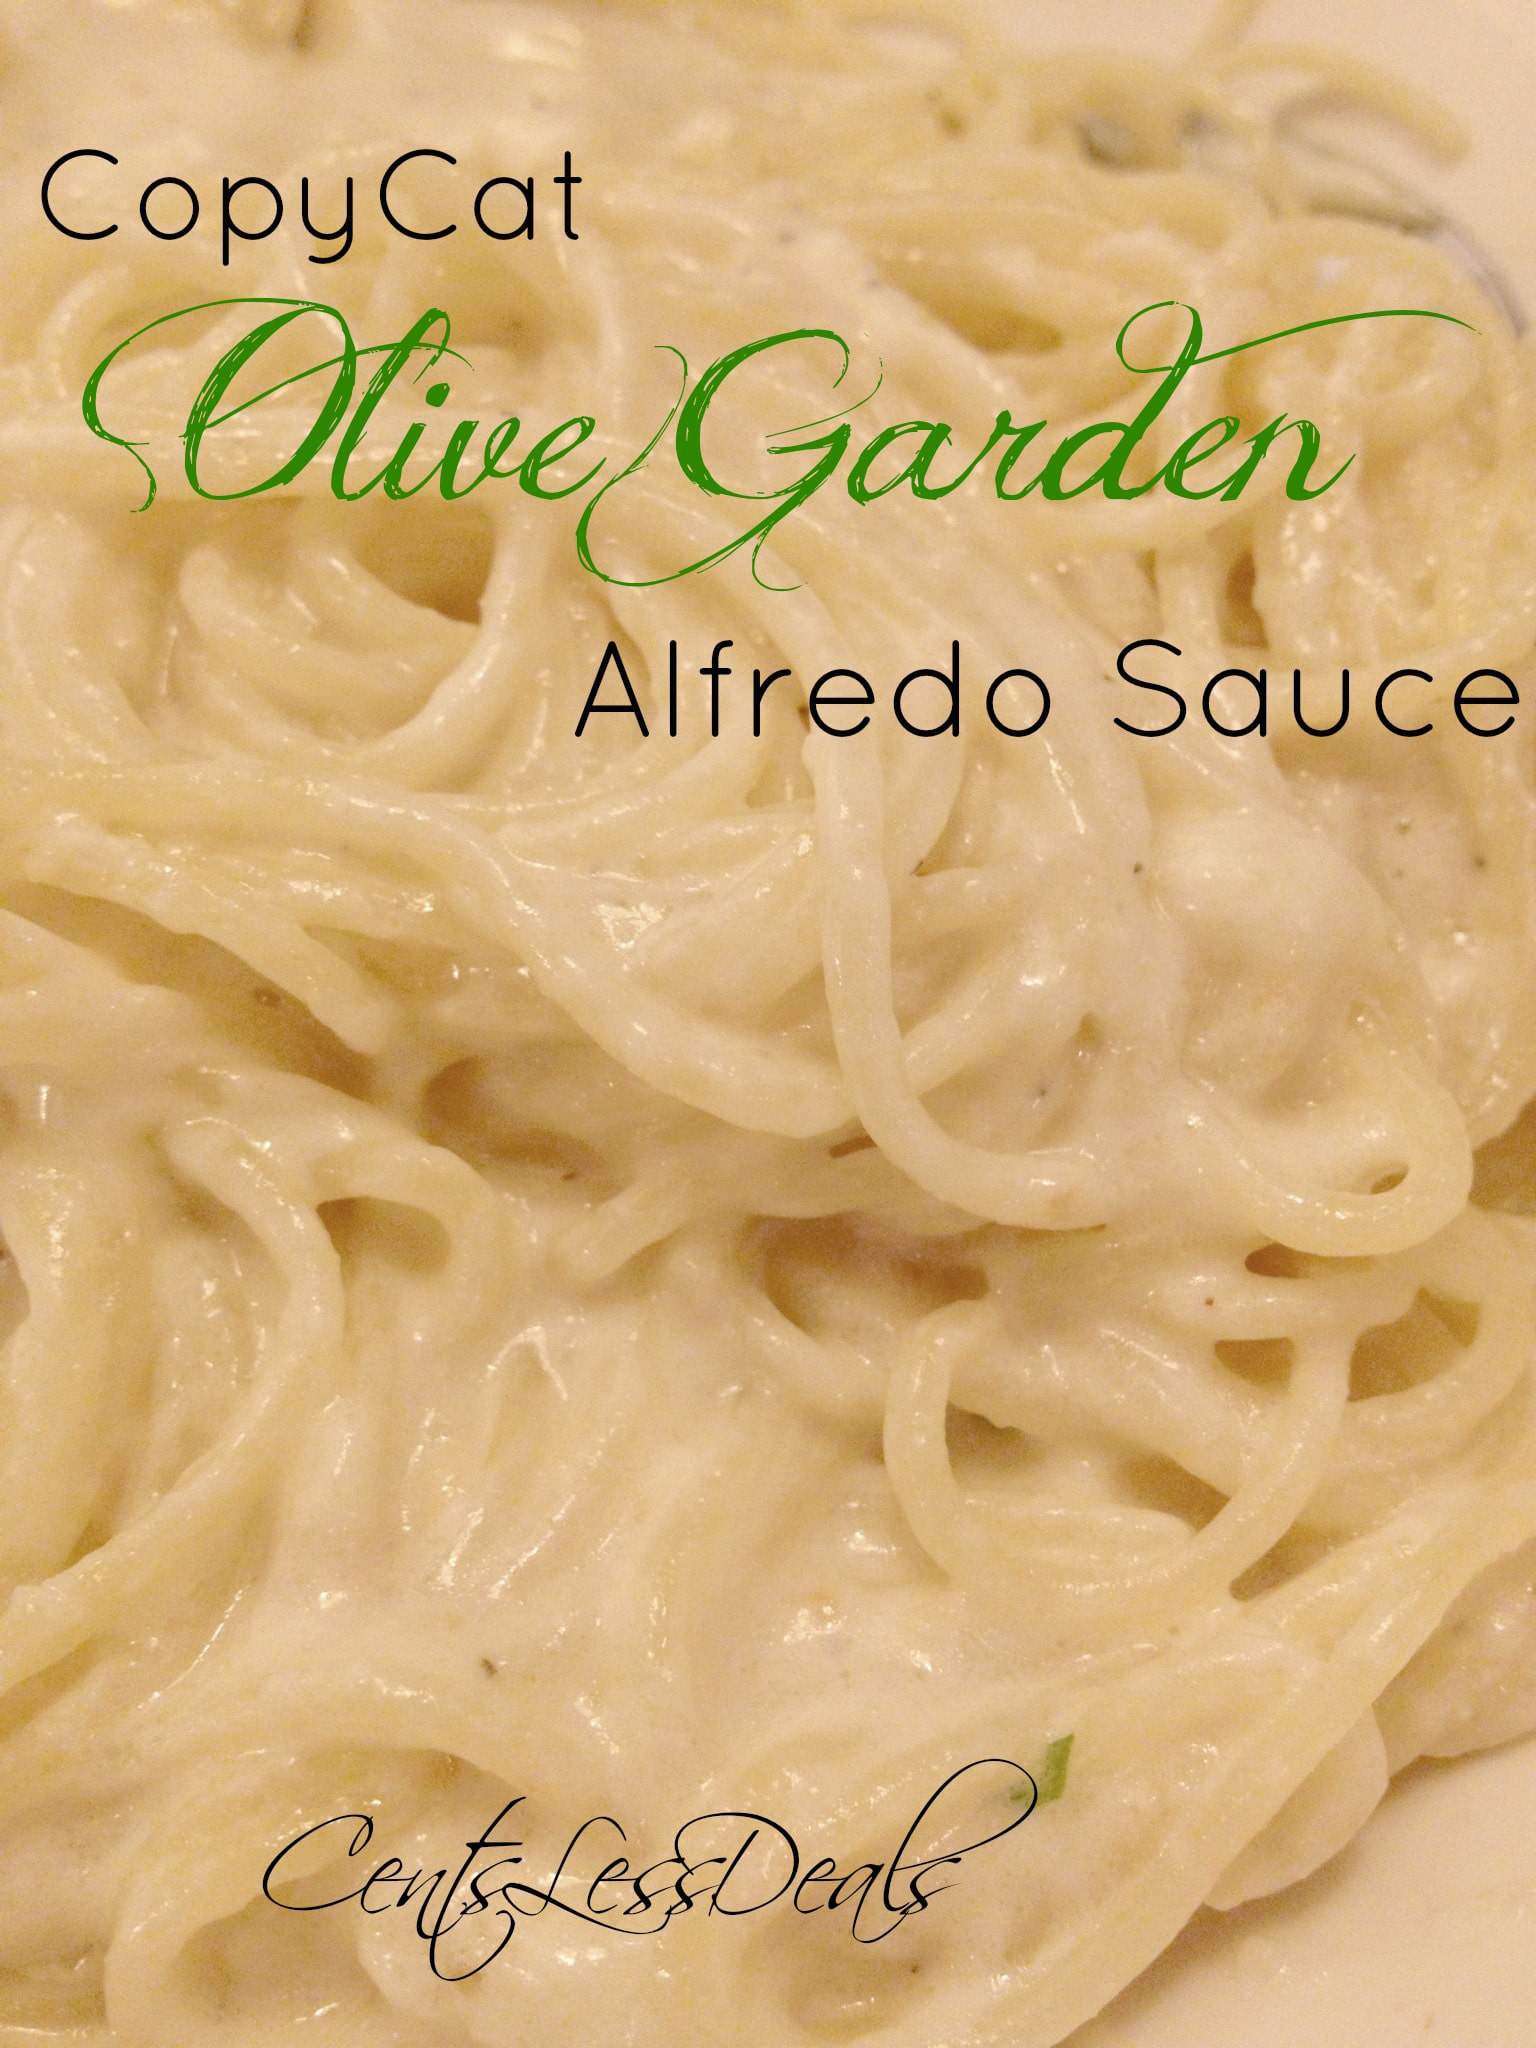 CopyCat Olive Garden Alfredo Sauce recipe